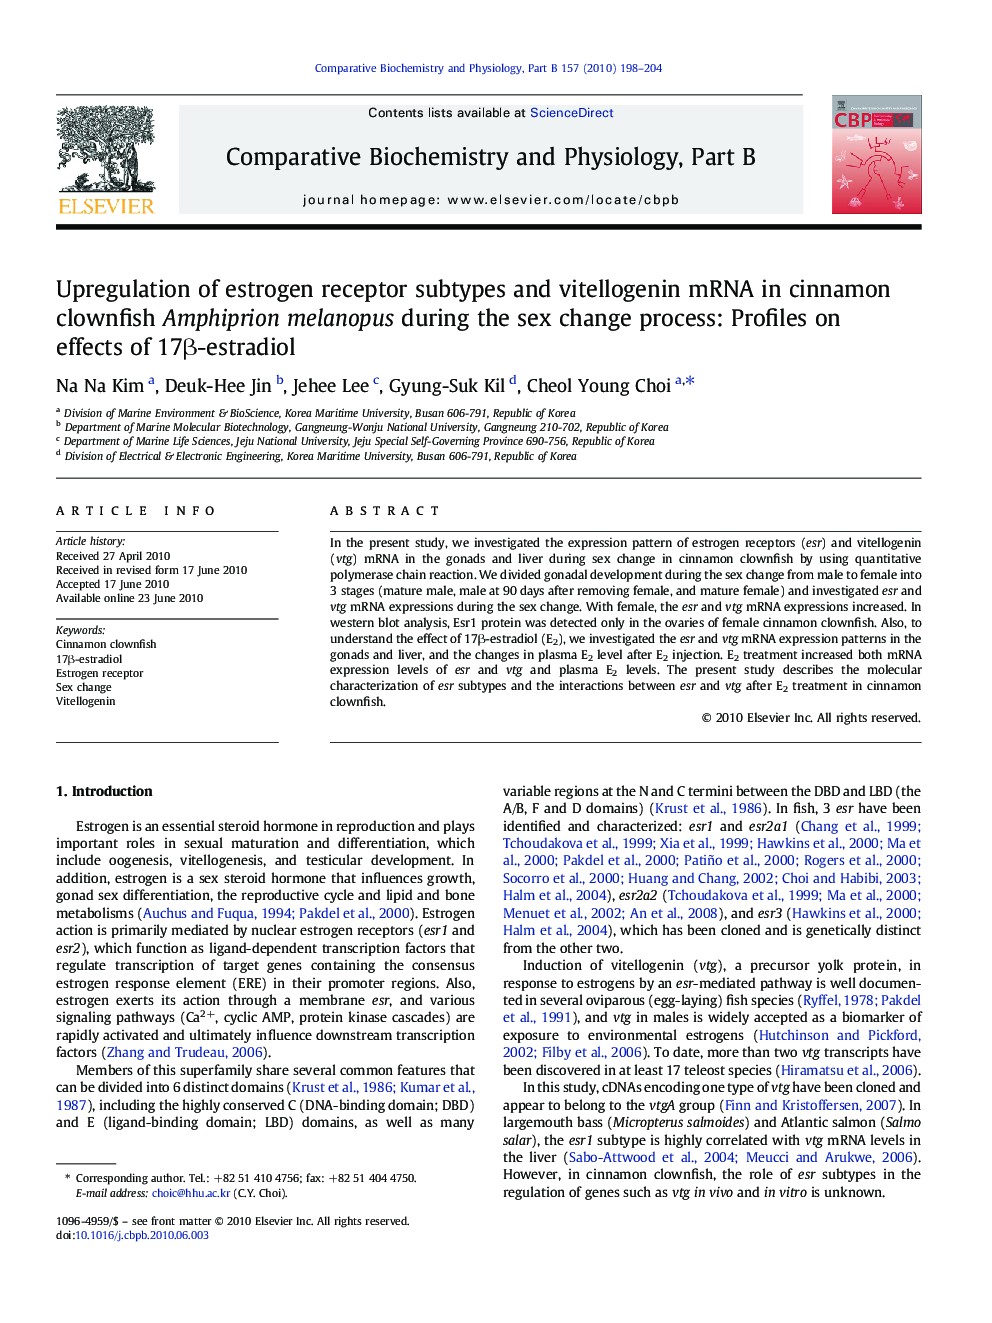 Upregulation of estrogen receptor subtypes and vitellogenin mRNA in cinnamon clownfish Amphiprion melanopus during the sex change process: Profiles on effects of 17β-estradiol